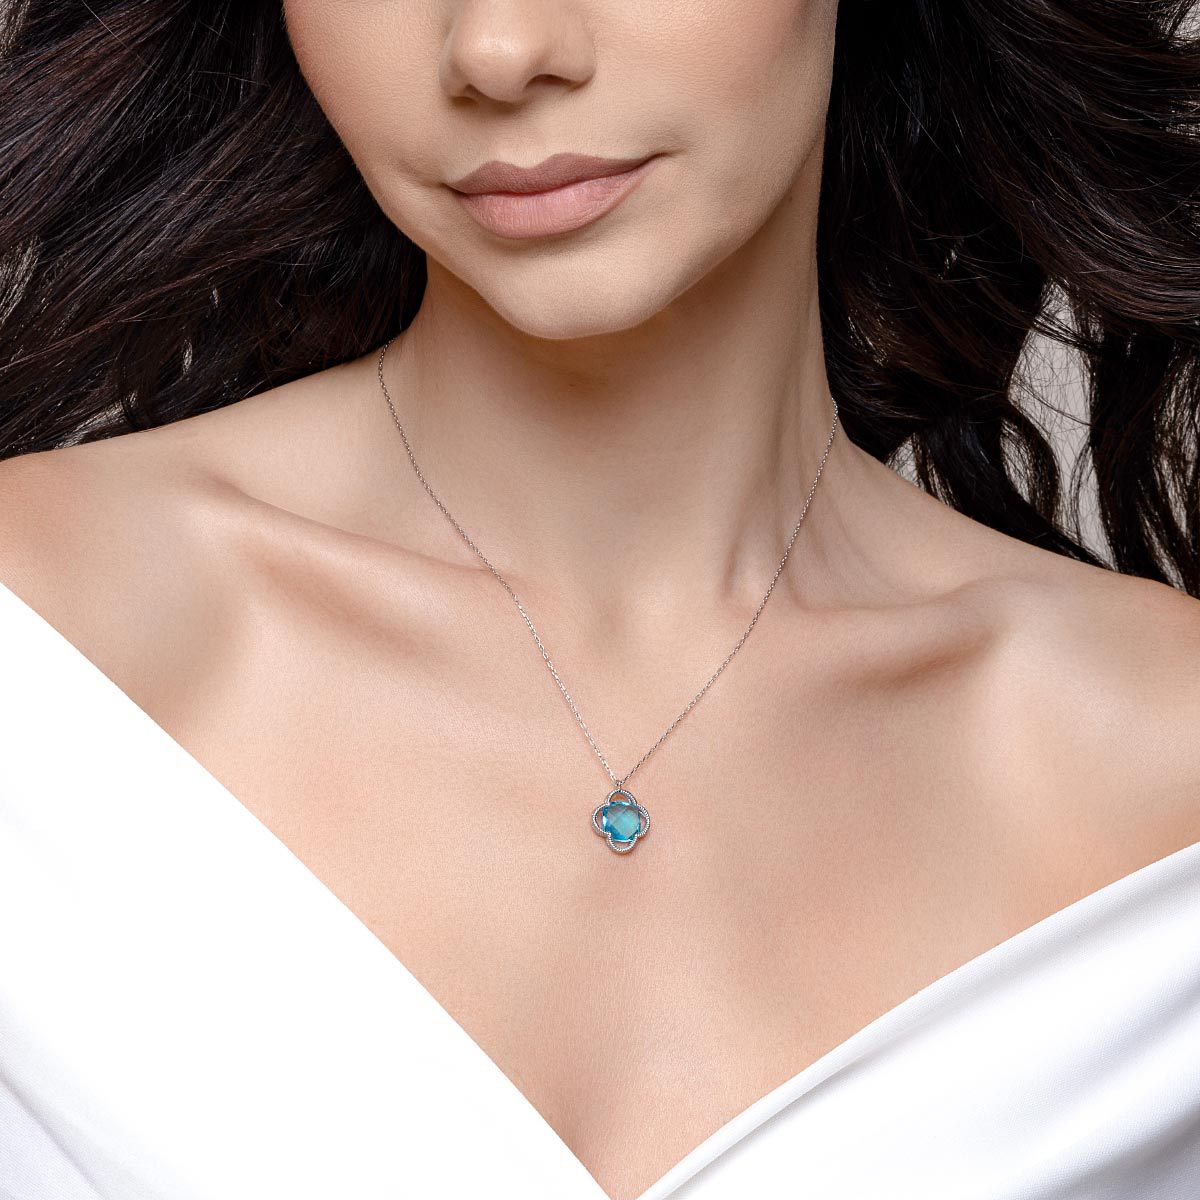 Dolce Vita Crystal Pendant Necklace (Medium)